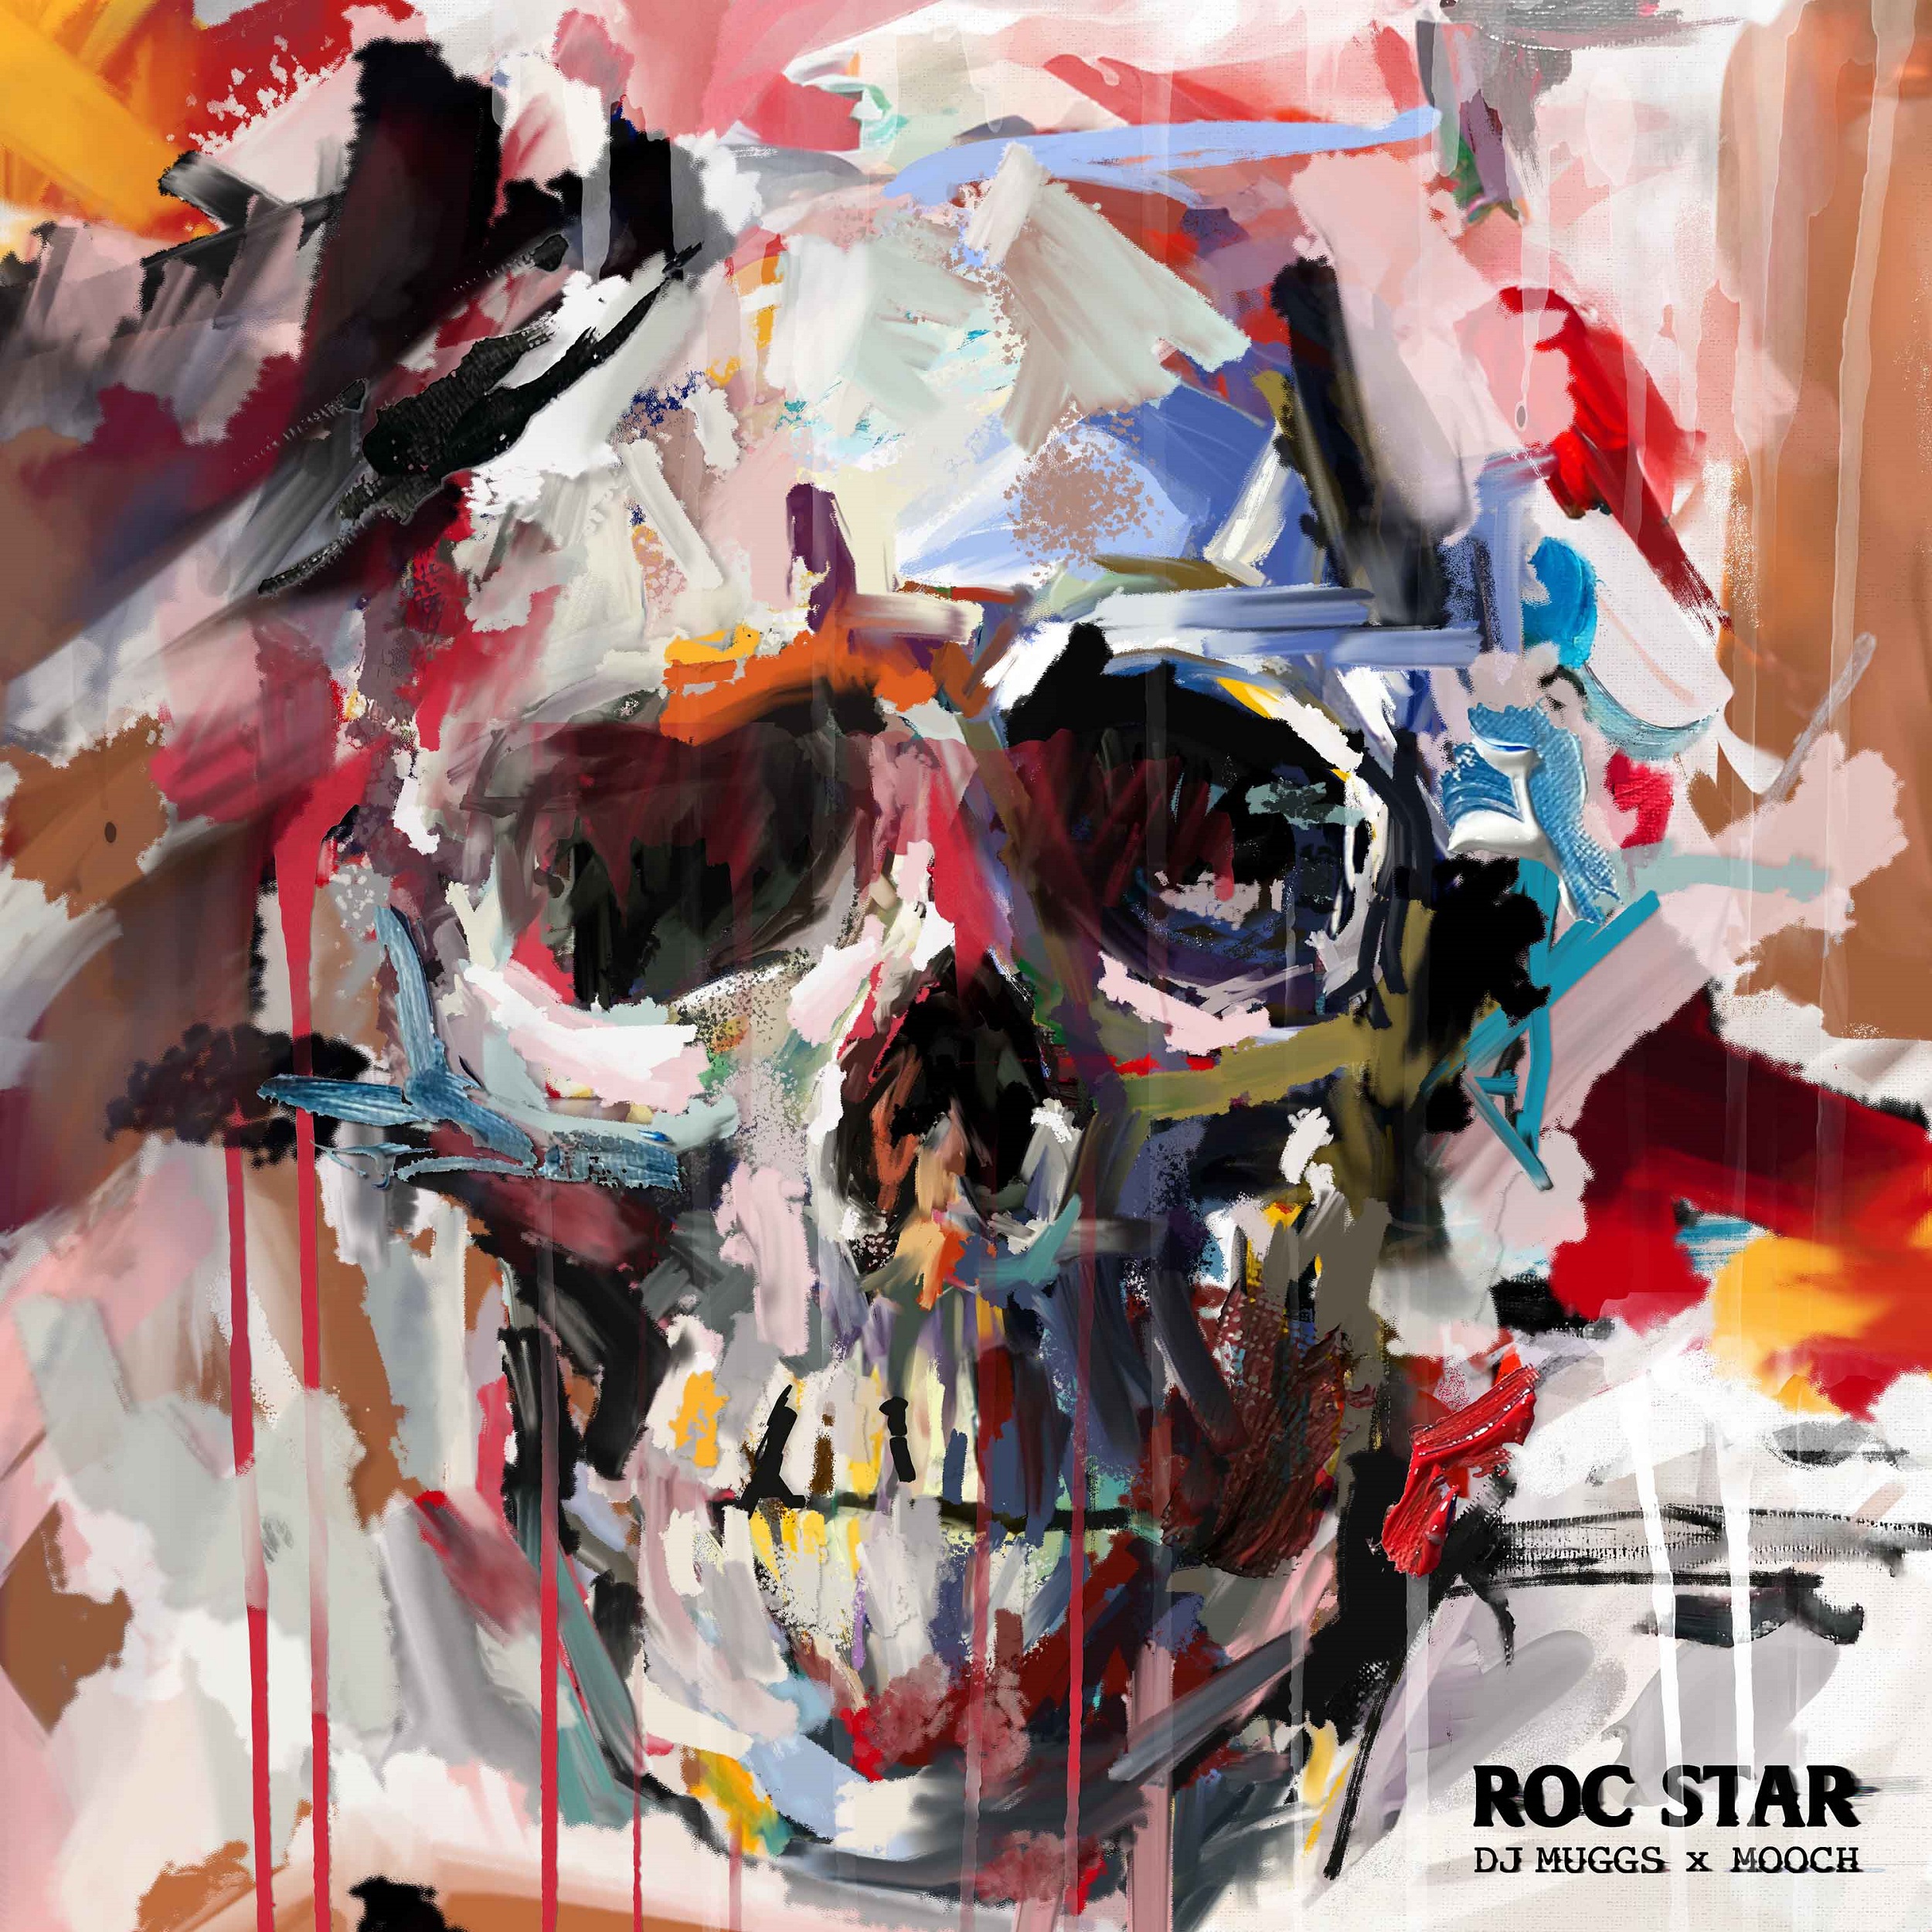 DJ Muggs x Mooch – Roc Star (Album Stream)